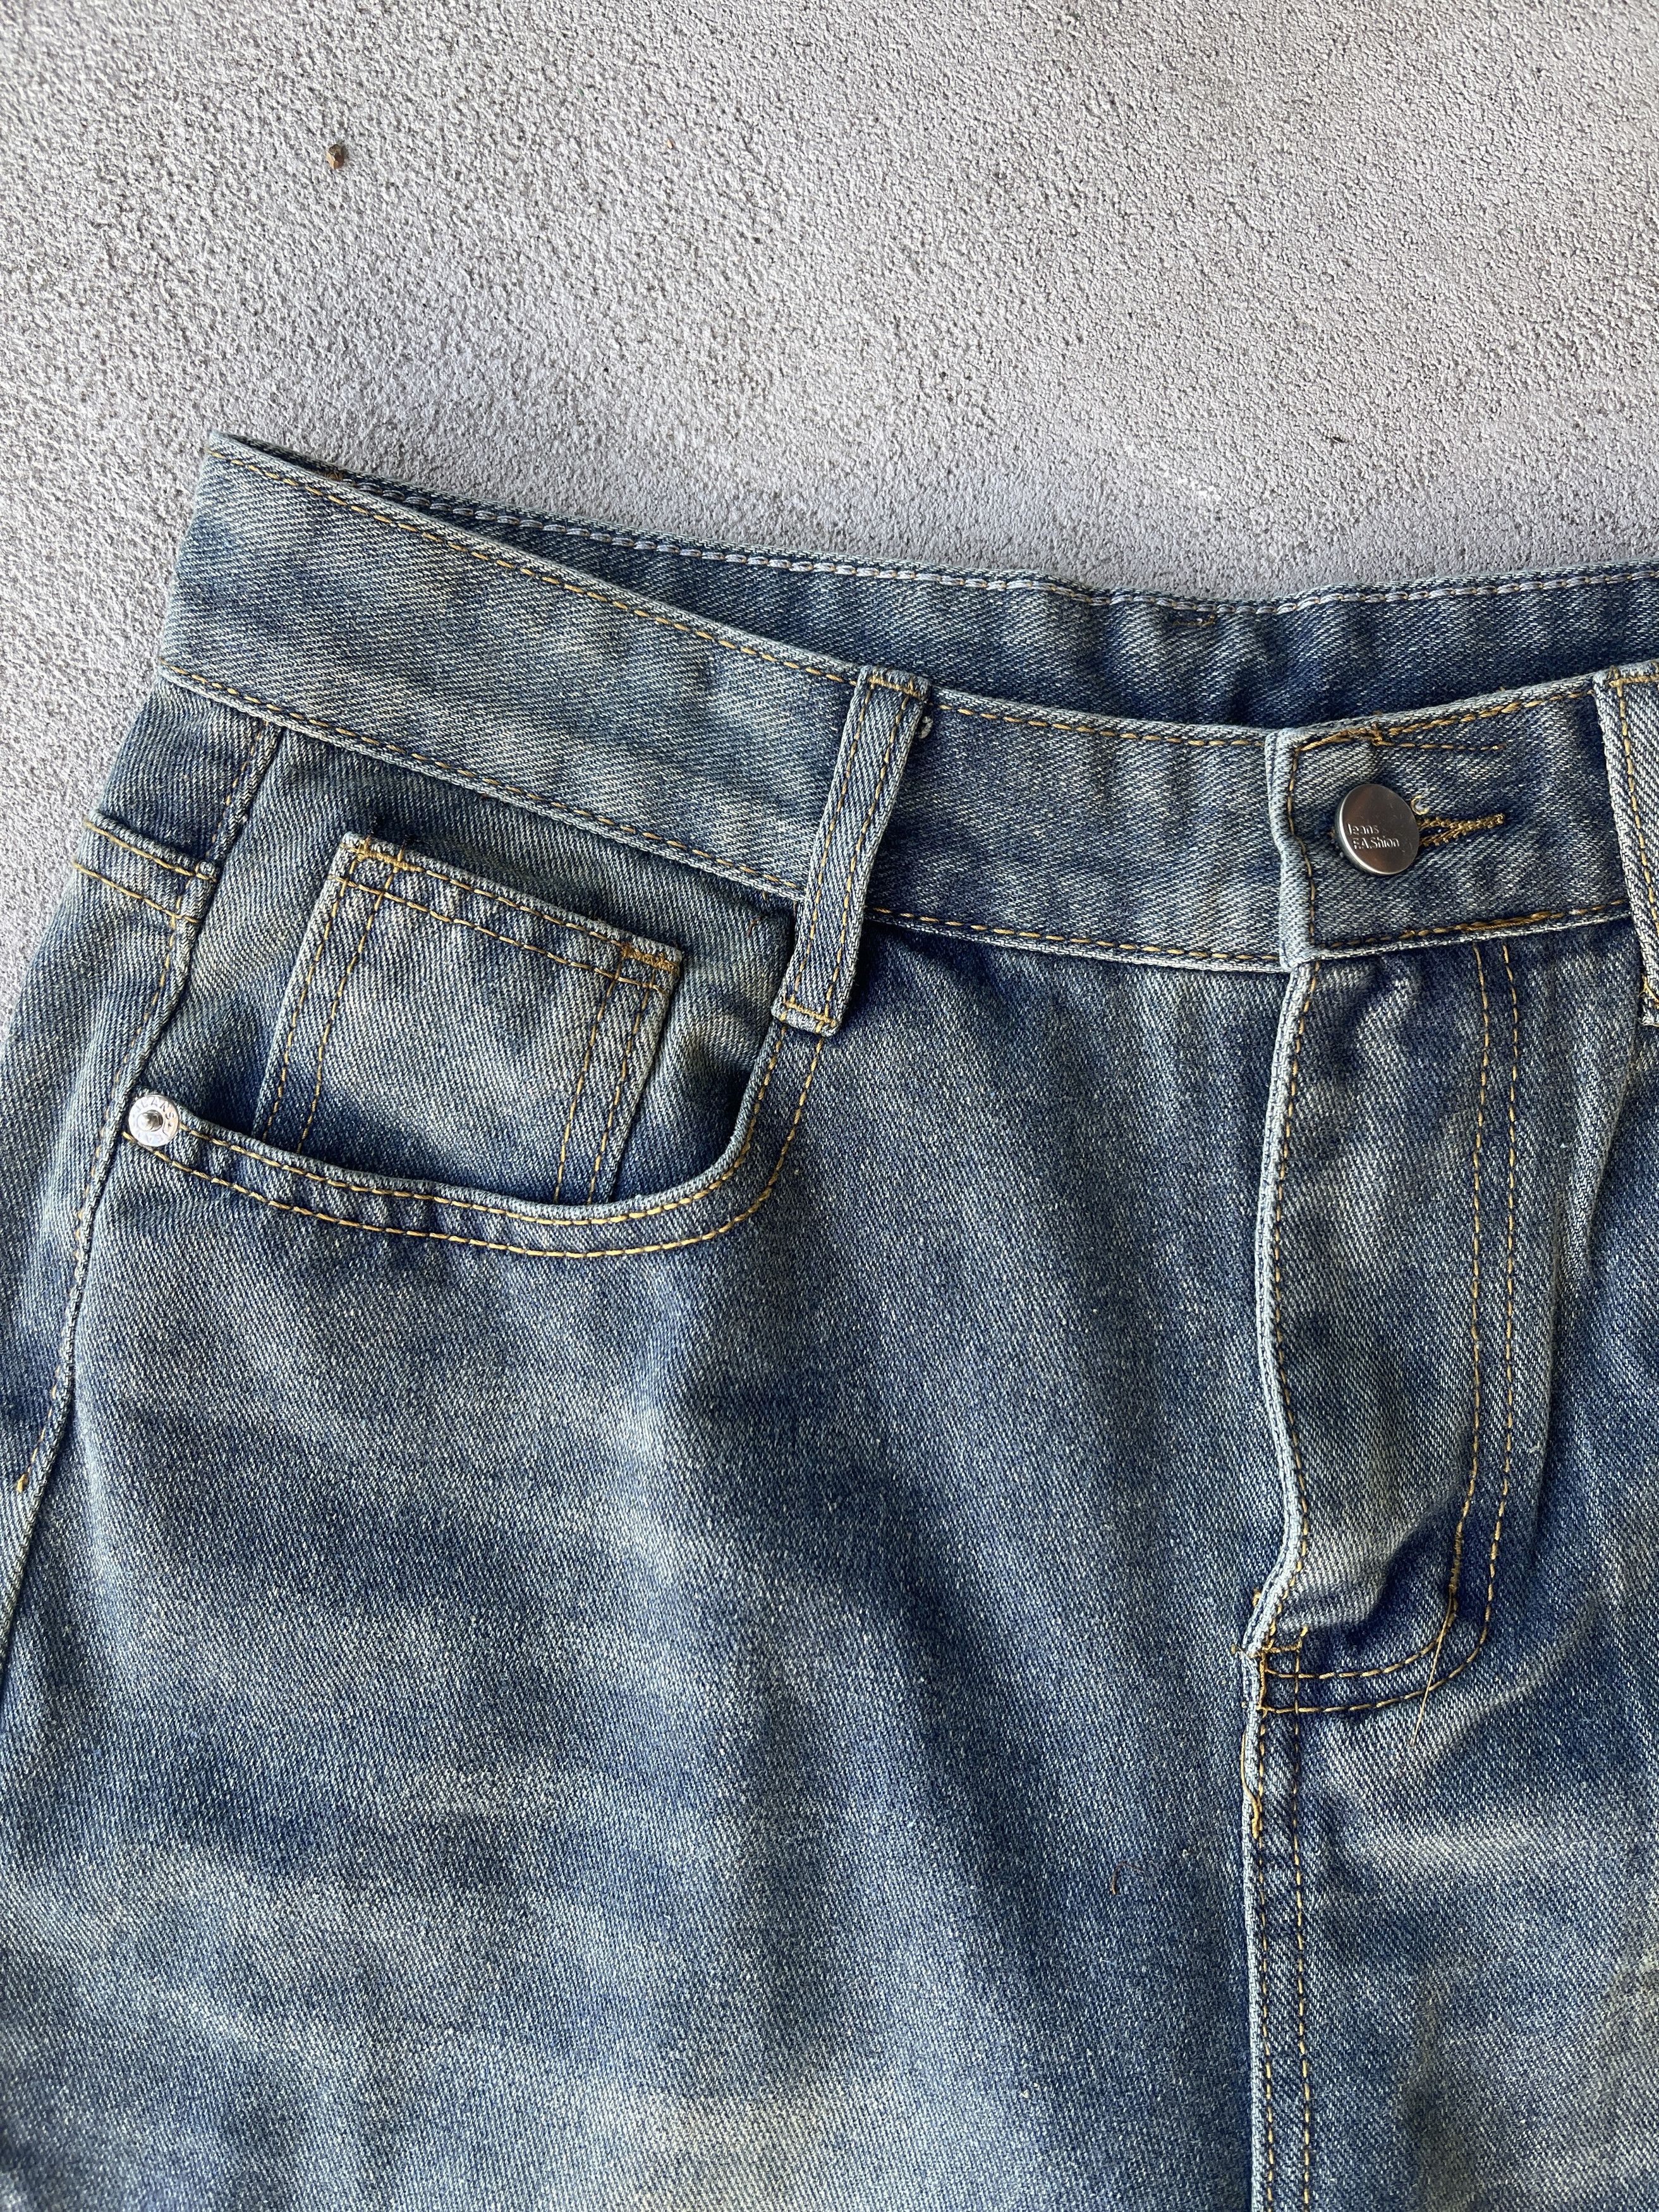 Vintage 2000s Japanese Americana Worker Denim Jeans - 3